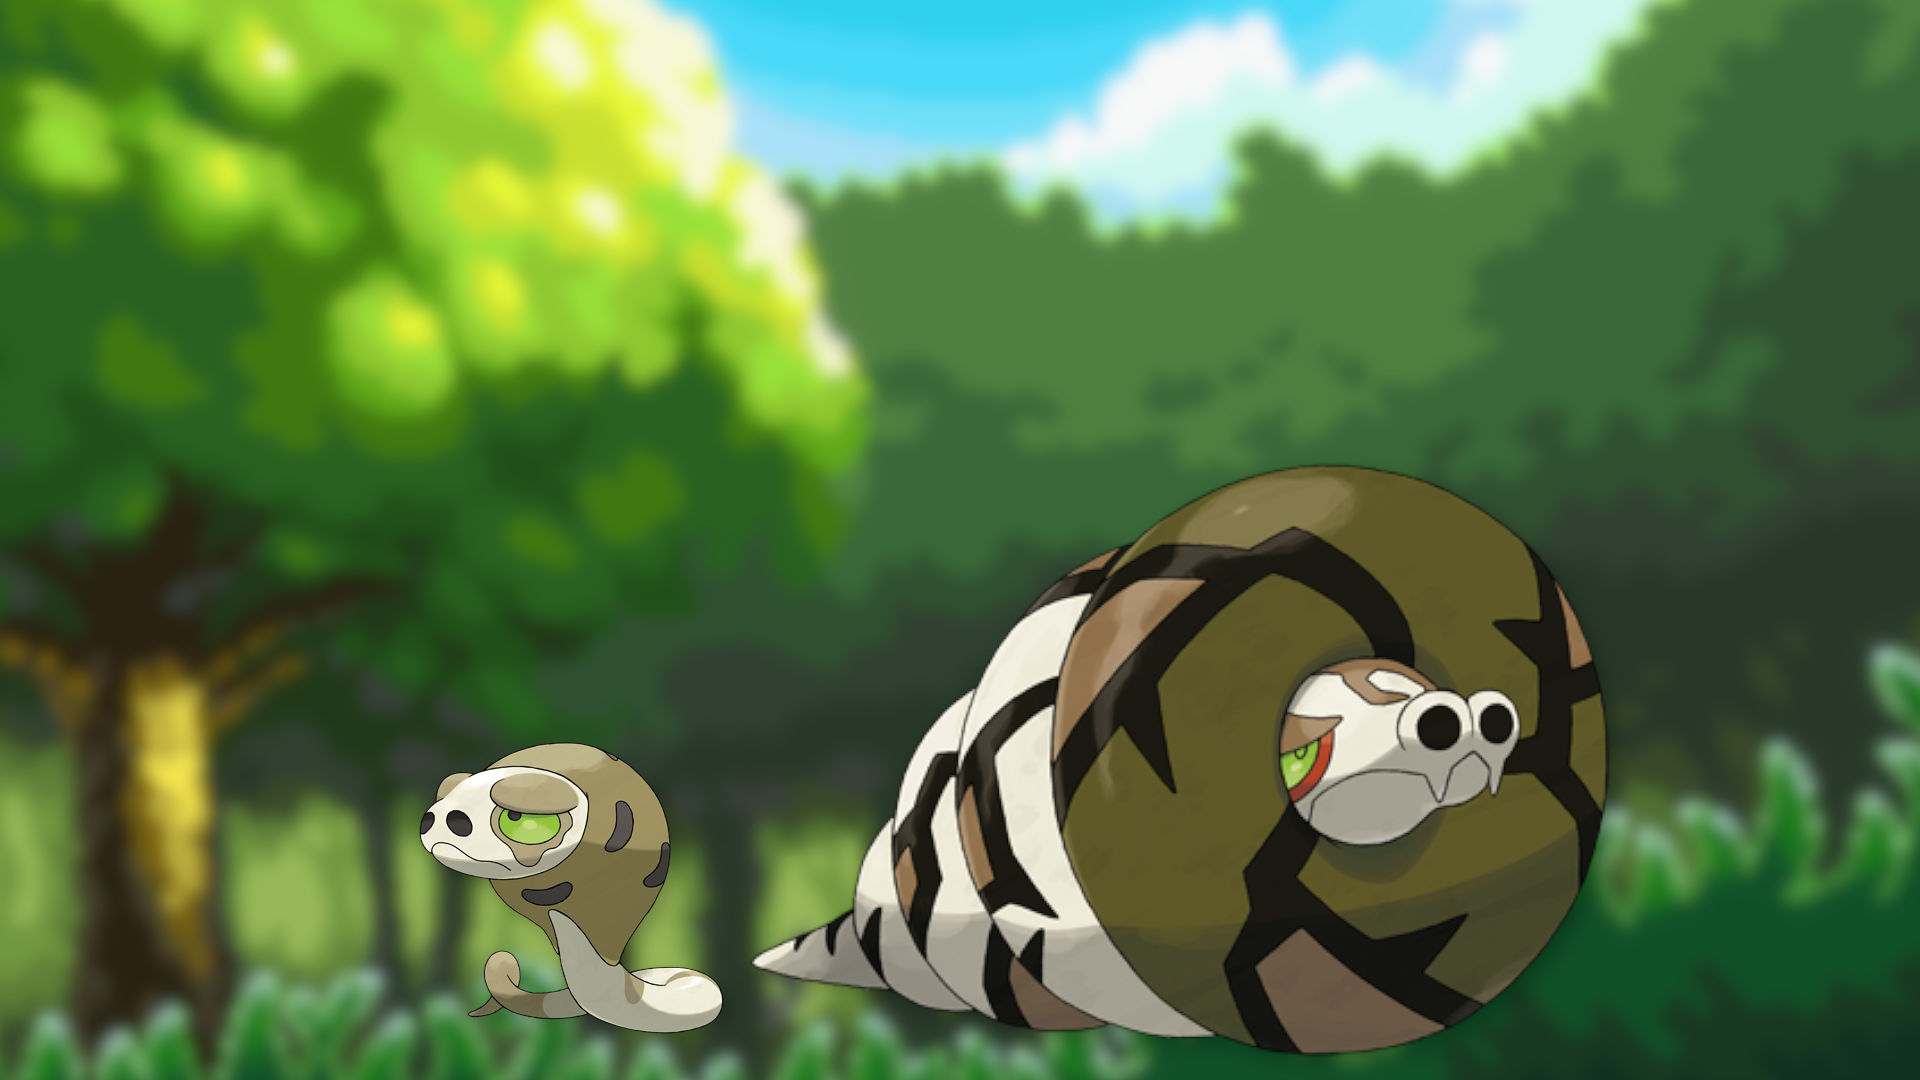 Custom image of Silicobra and Sandaconda for snake Pokémon guide